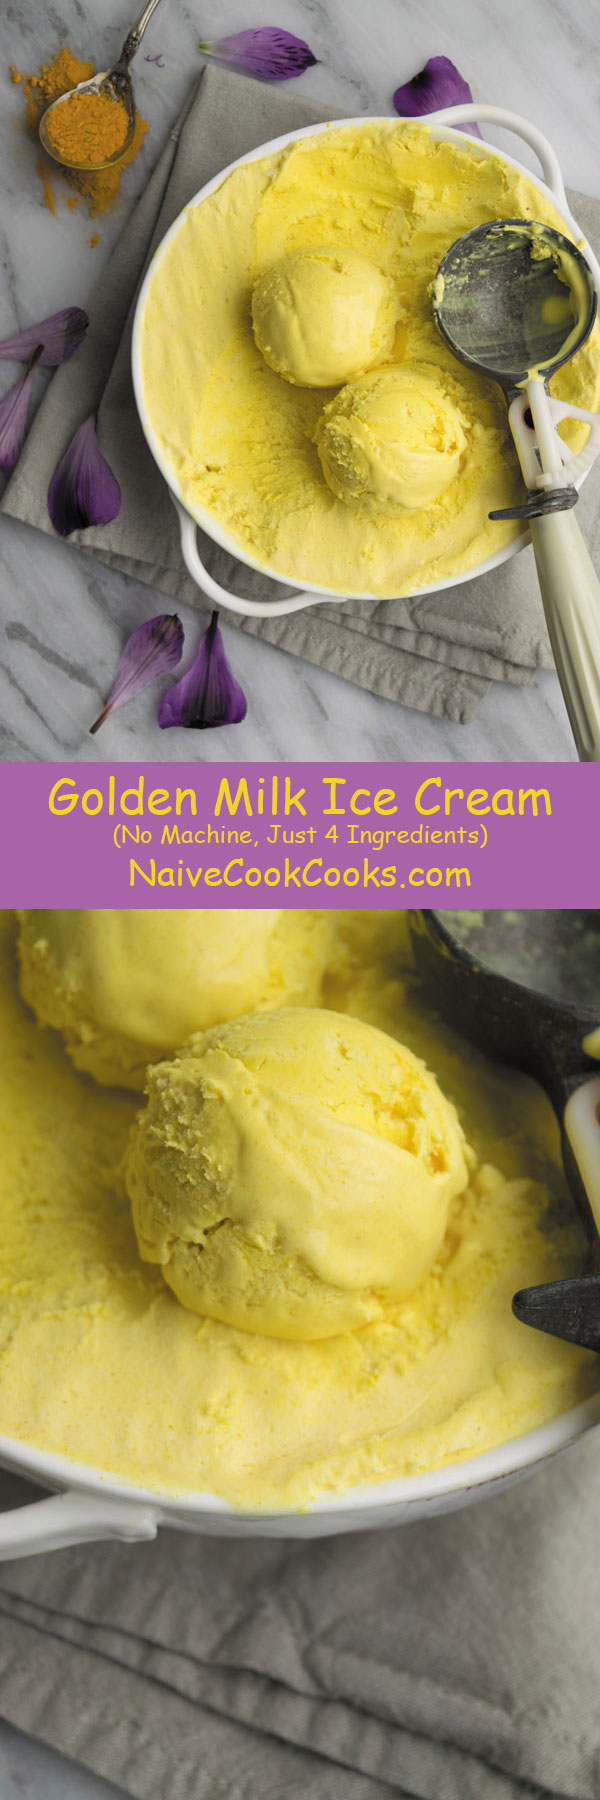 golden milk ice cream long pin